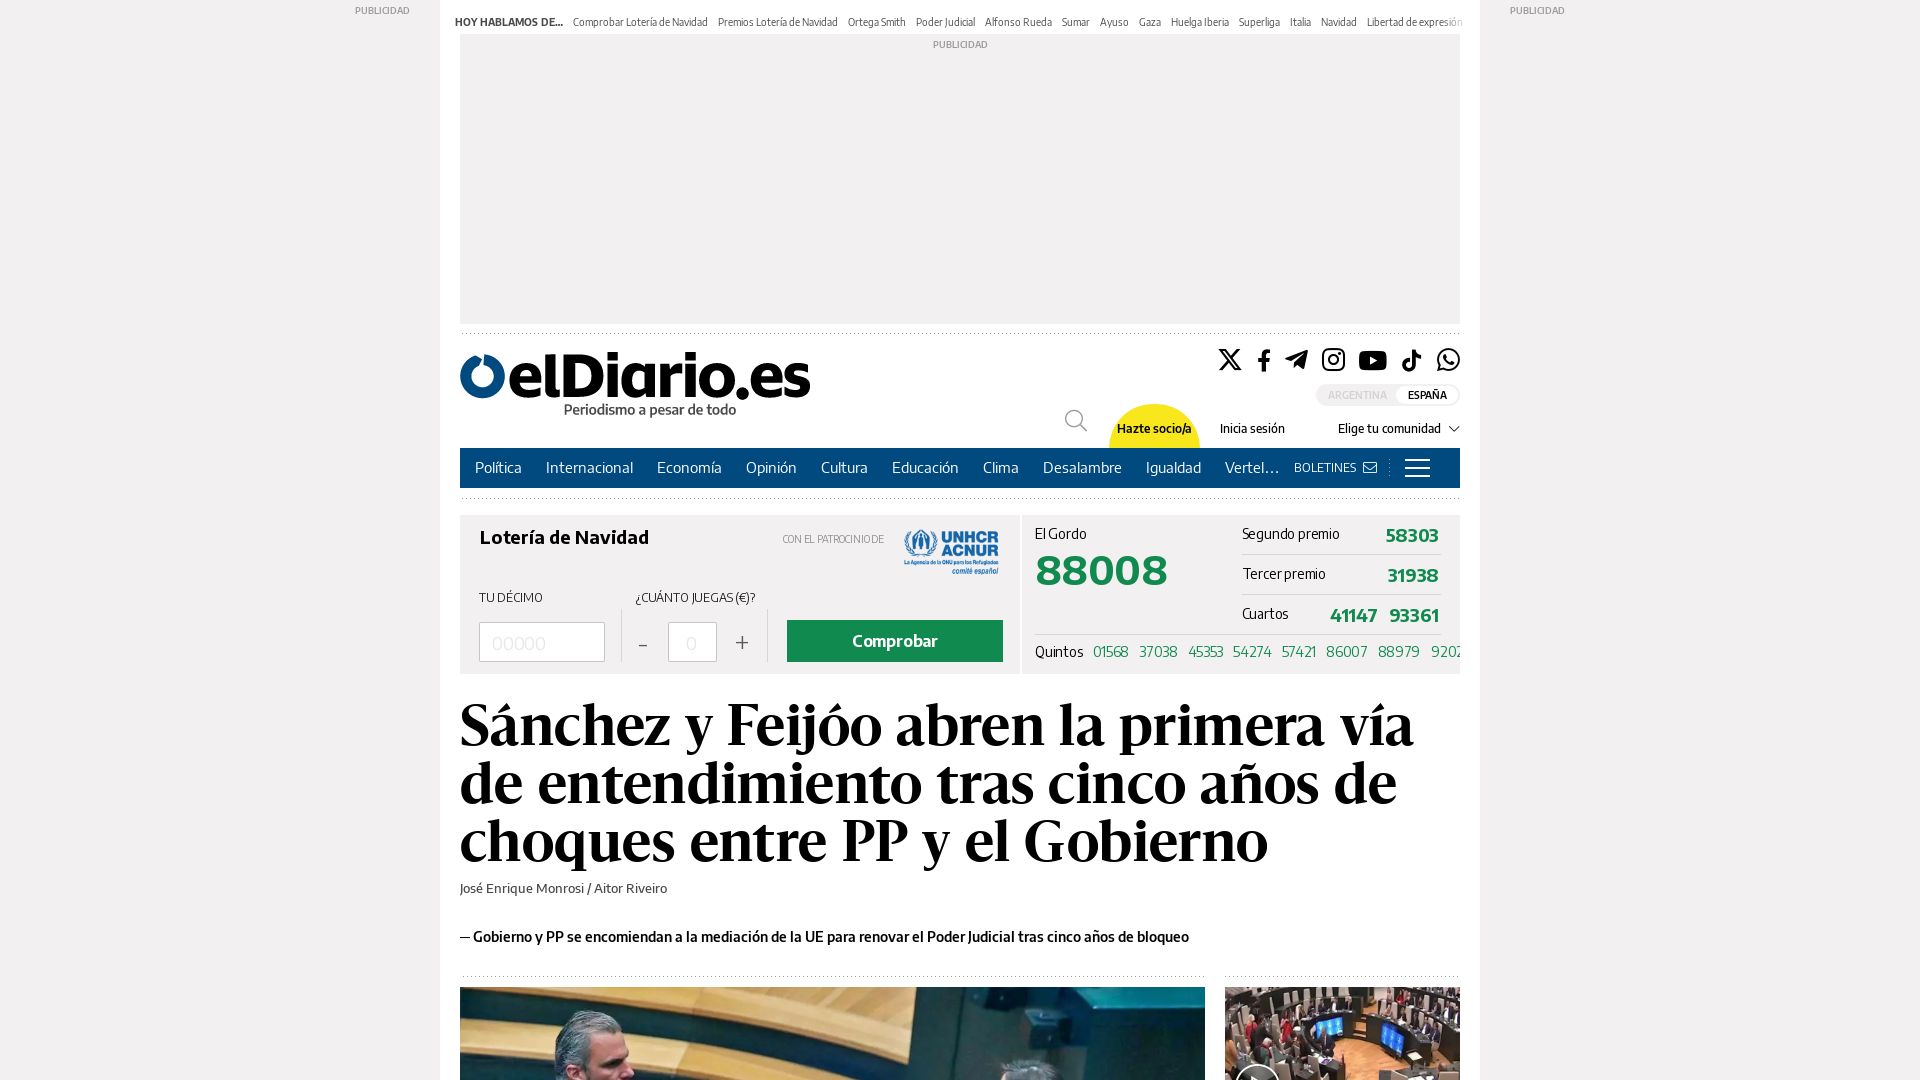 Website status eldiario.es is   ONLINE